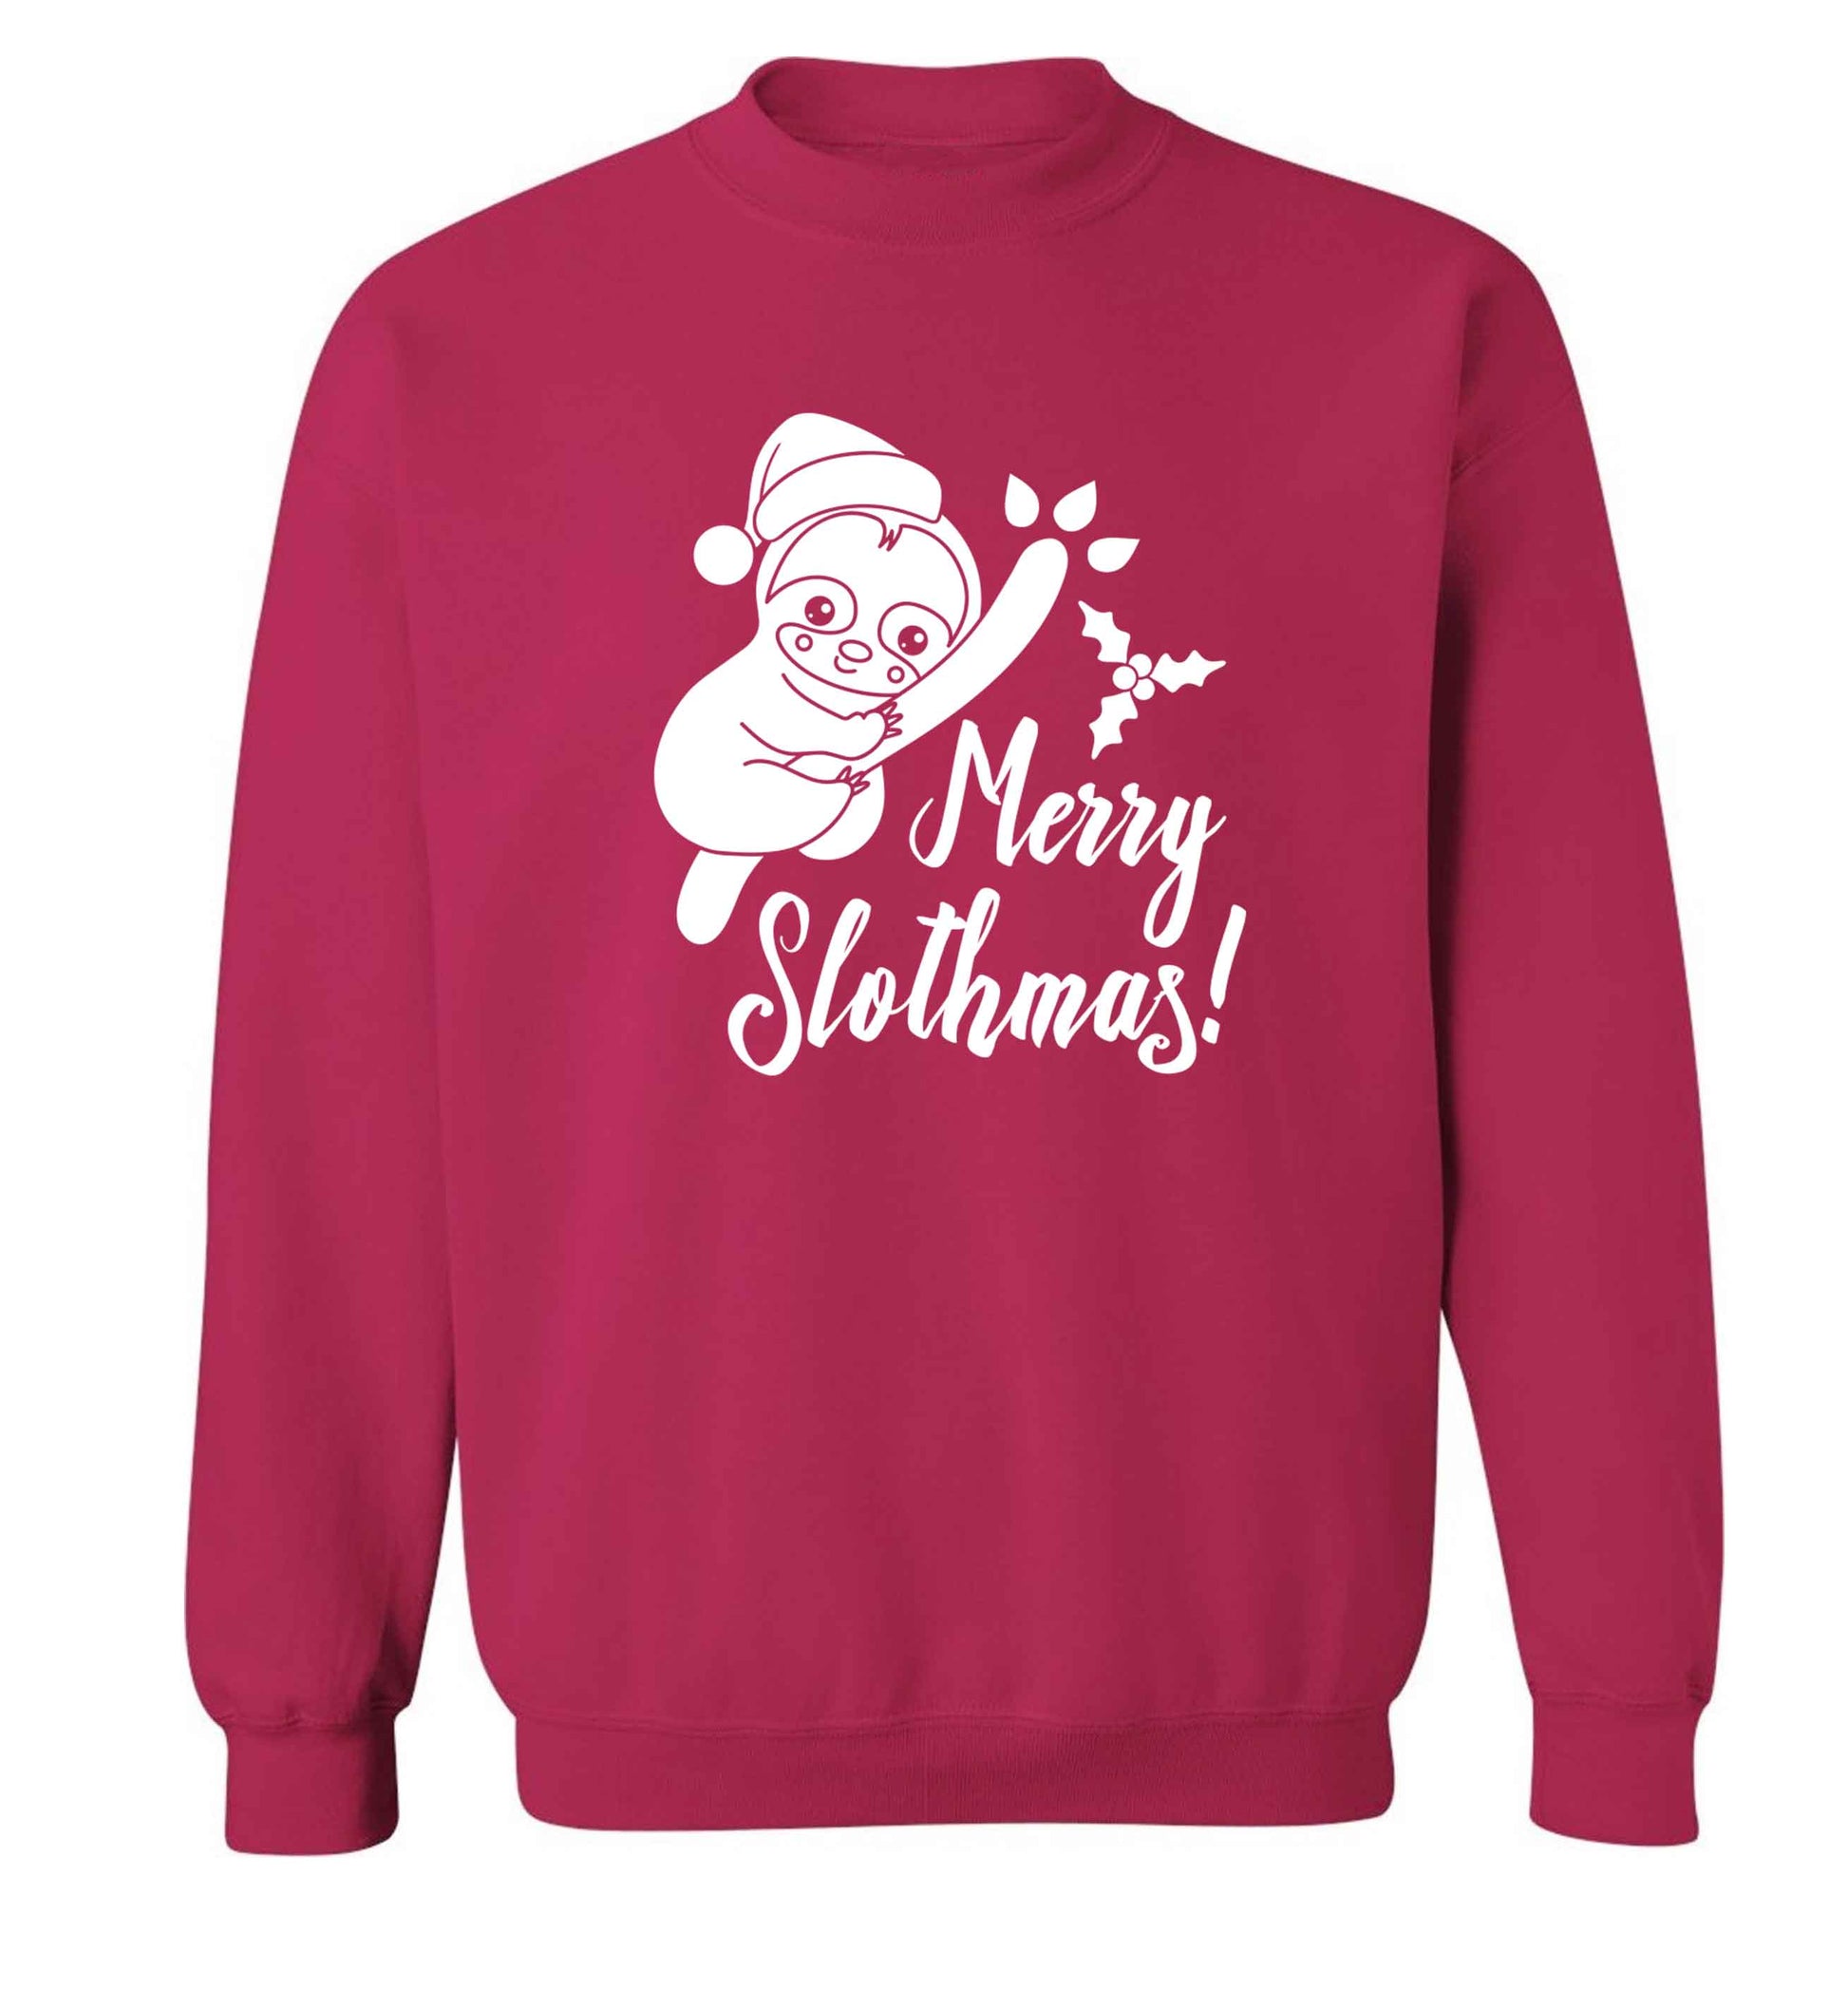 Merry Slothmas adult's unisex pink sweater 2XL